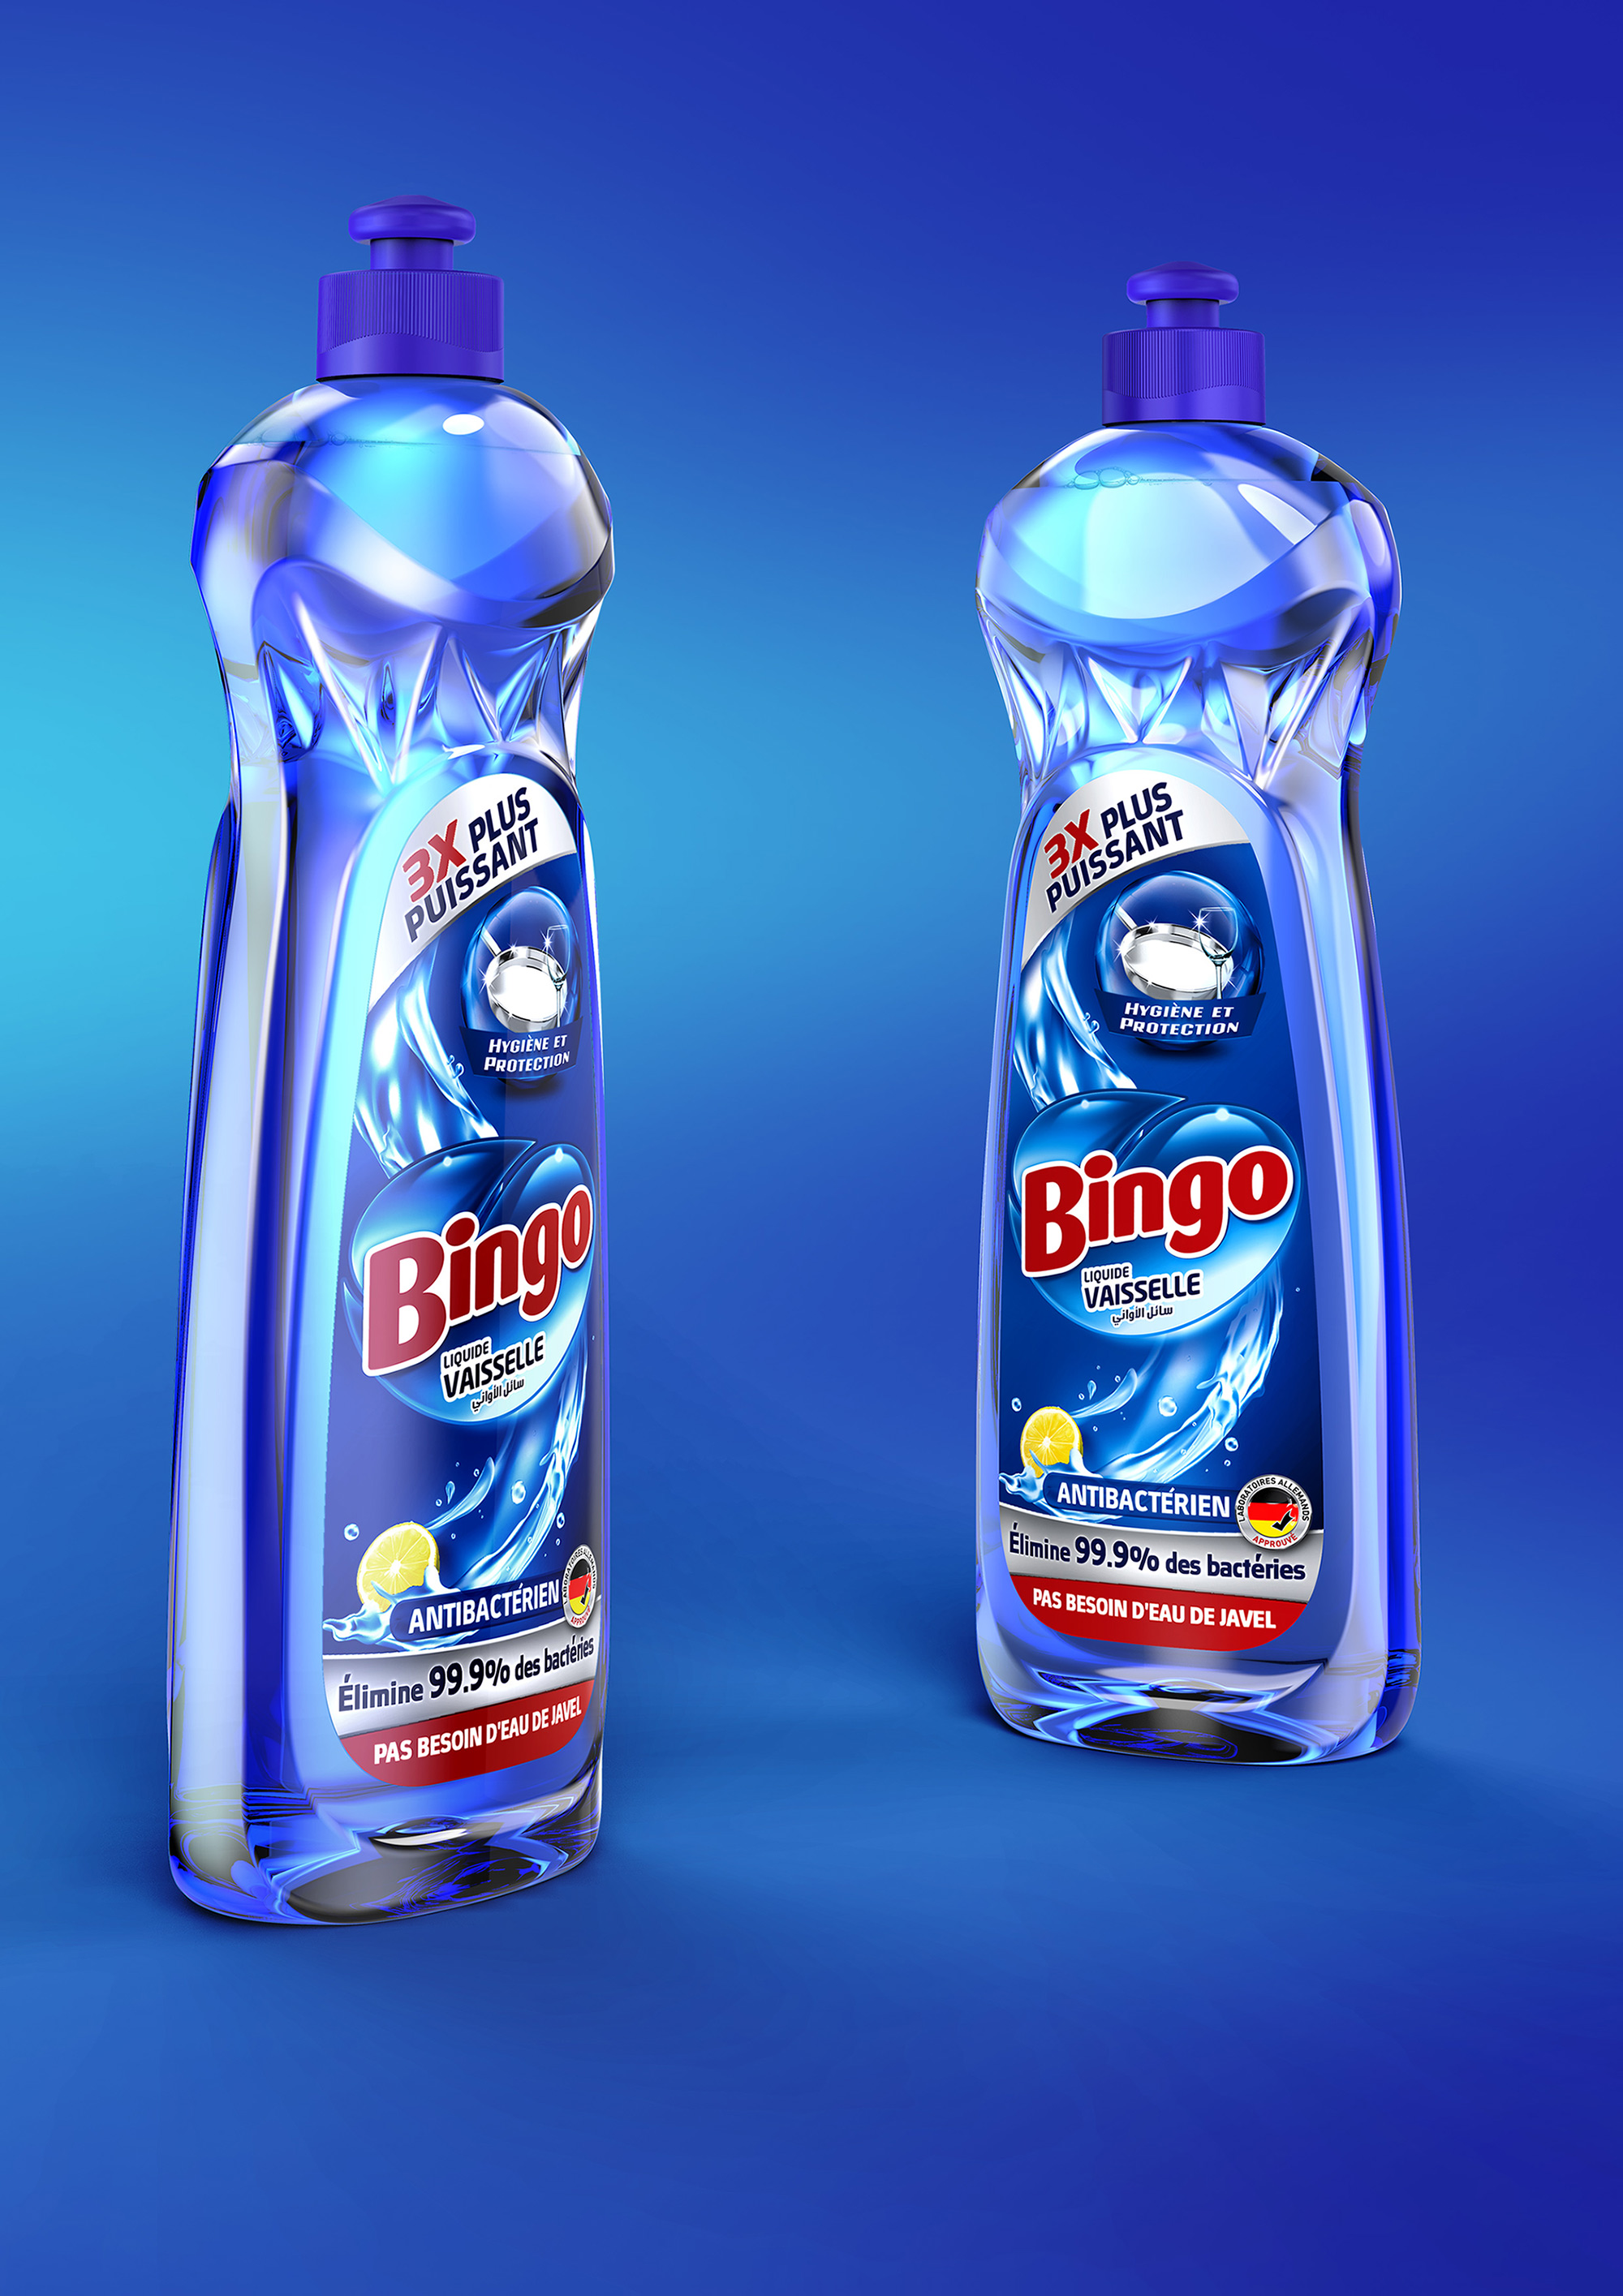 Bingo Dish Washing Detergent Packaging Industrial Design (Pet Bottle)